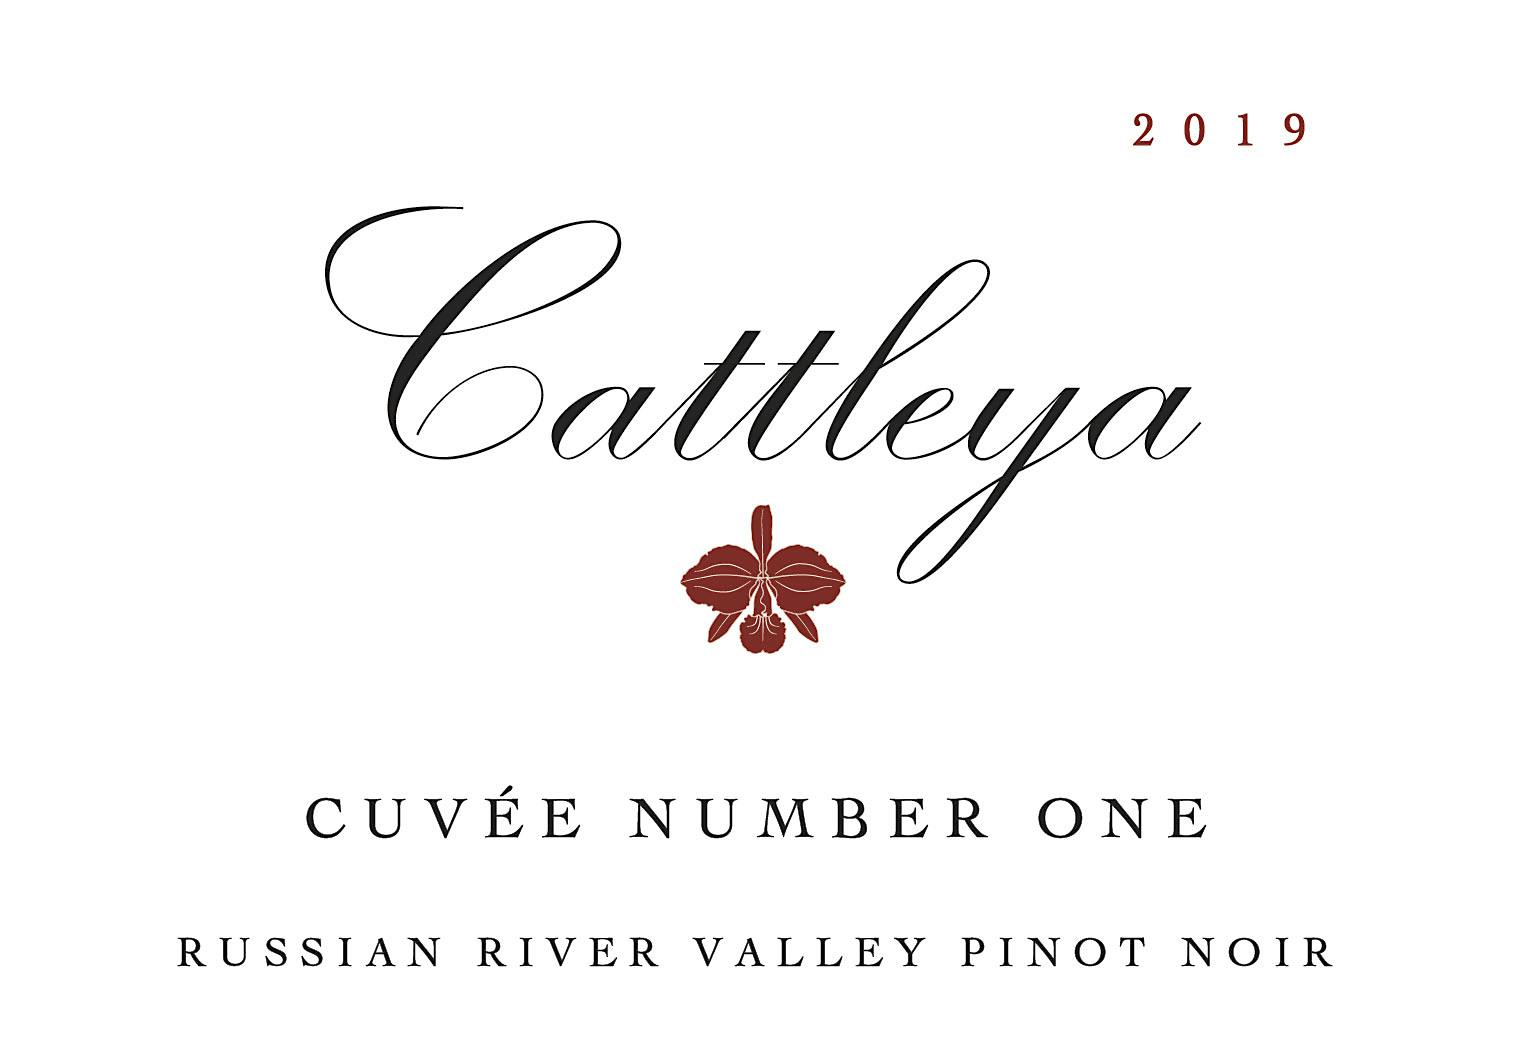 Label for Cattleya